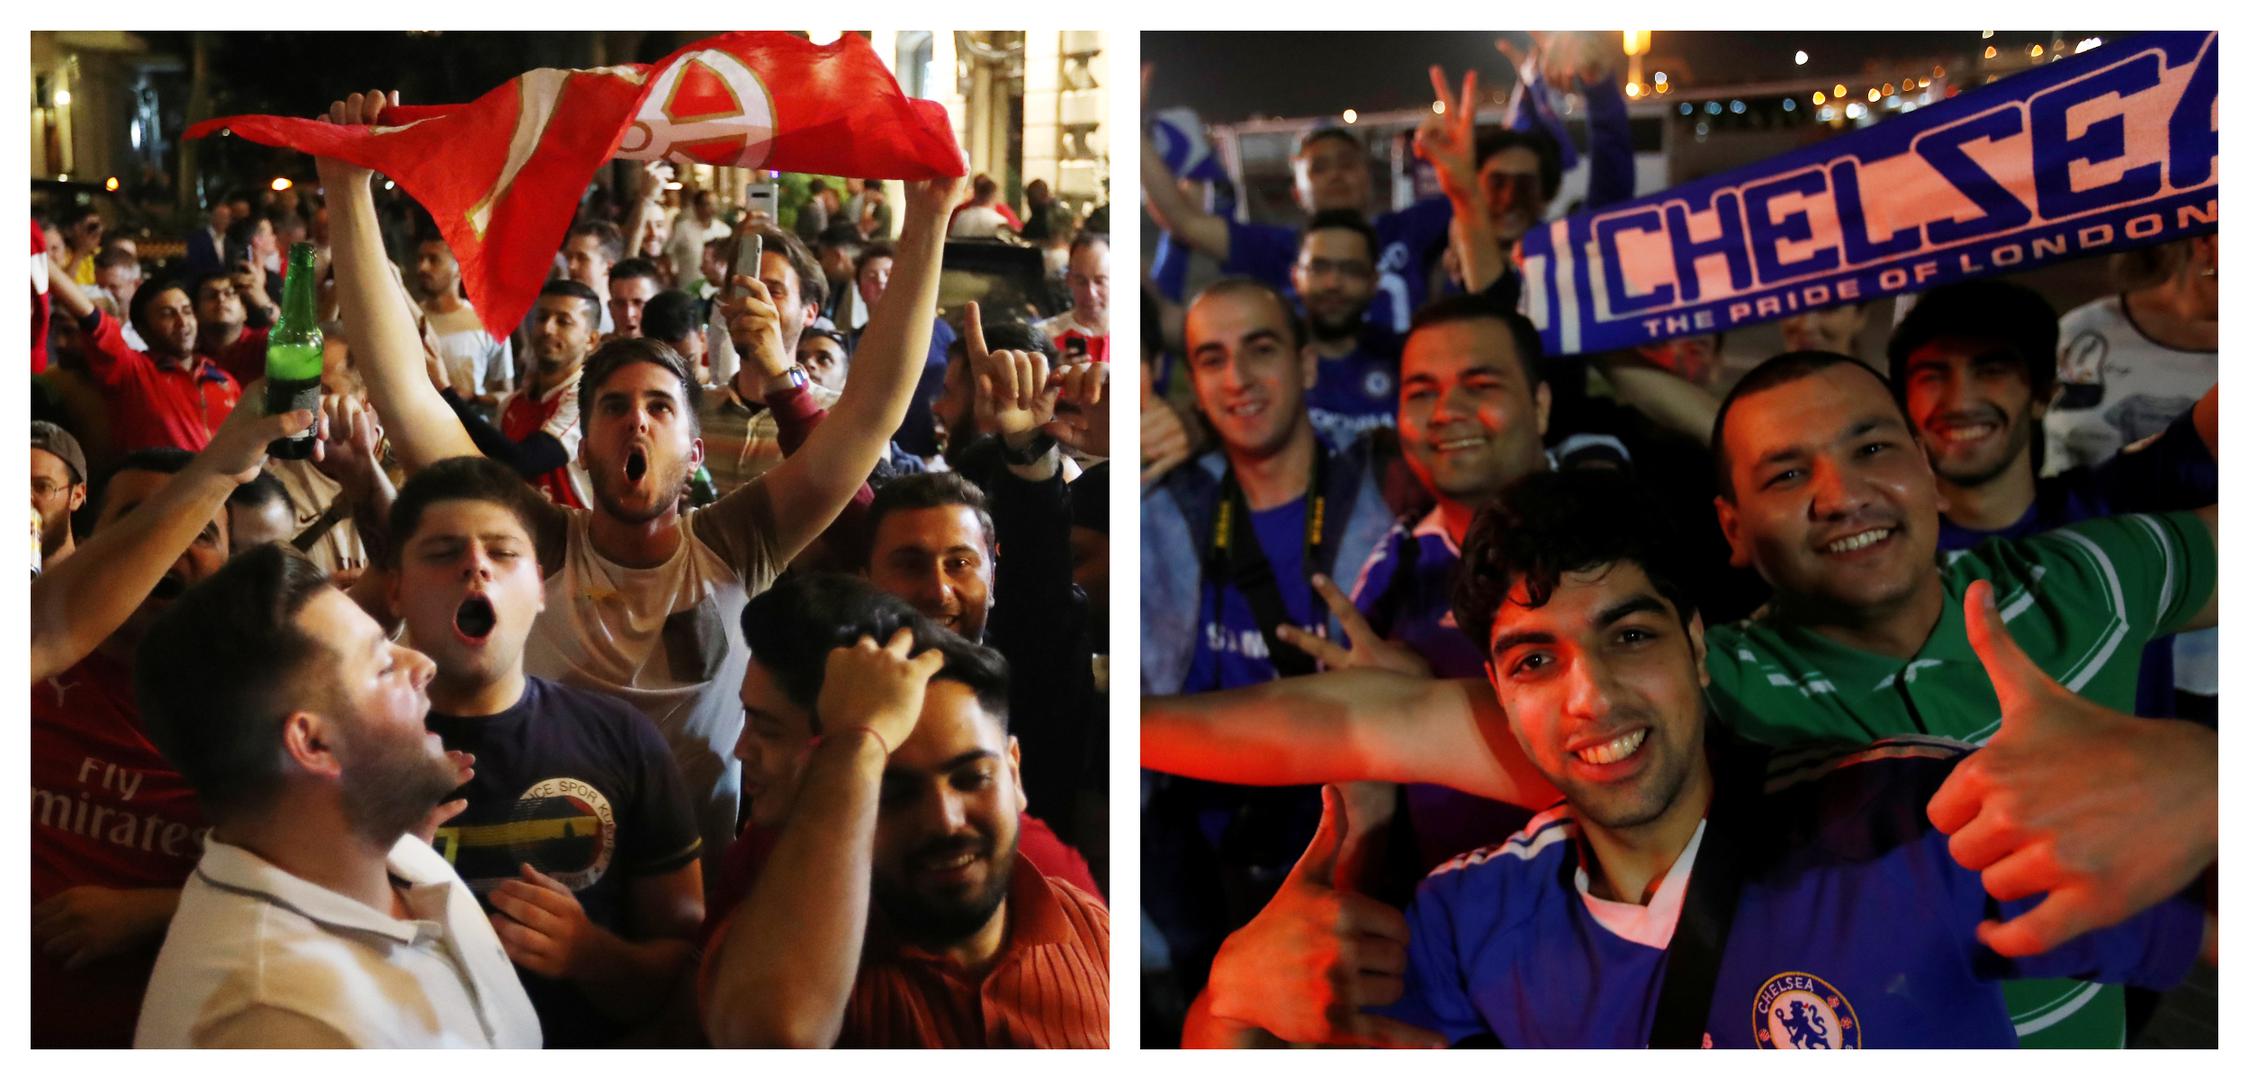 Nogometaši Chelseaja i Arsenala večeras u Bakuu igraju finale Europske lige. Utakmica na Olimpijskom stadionu počinje u 21 sat. 